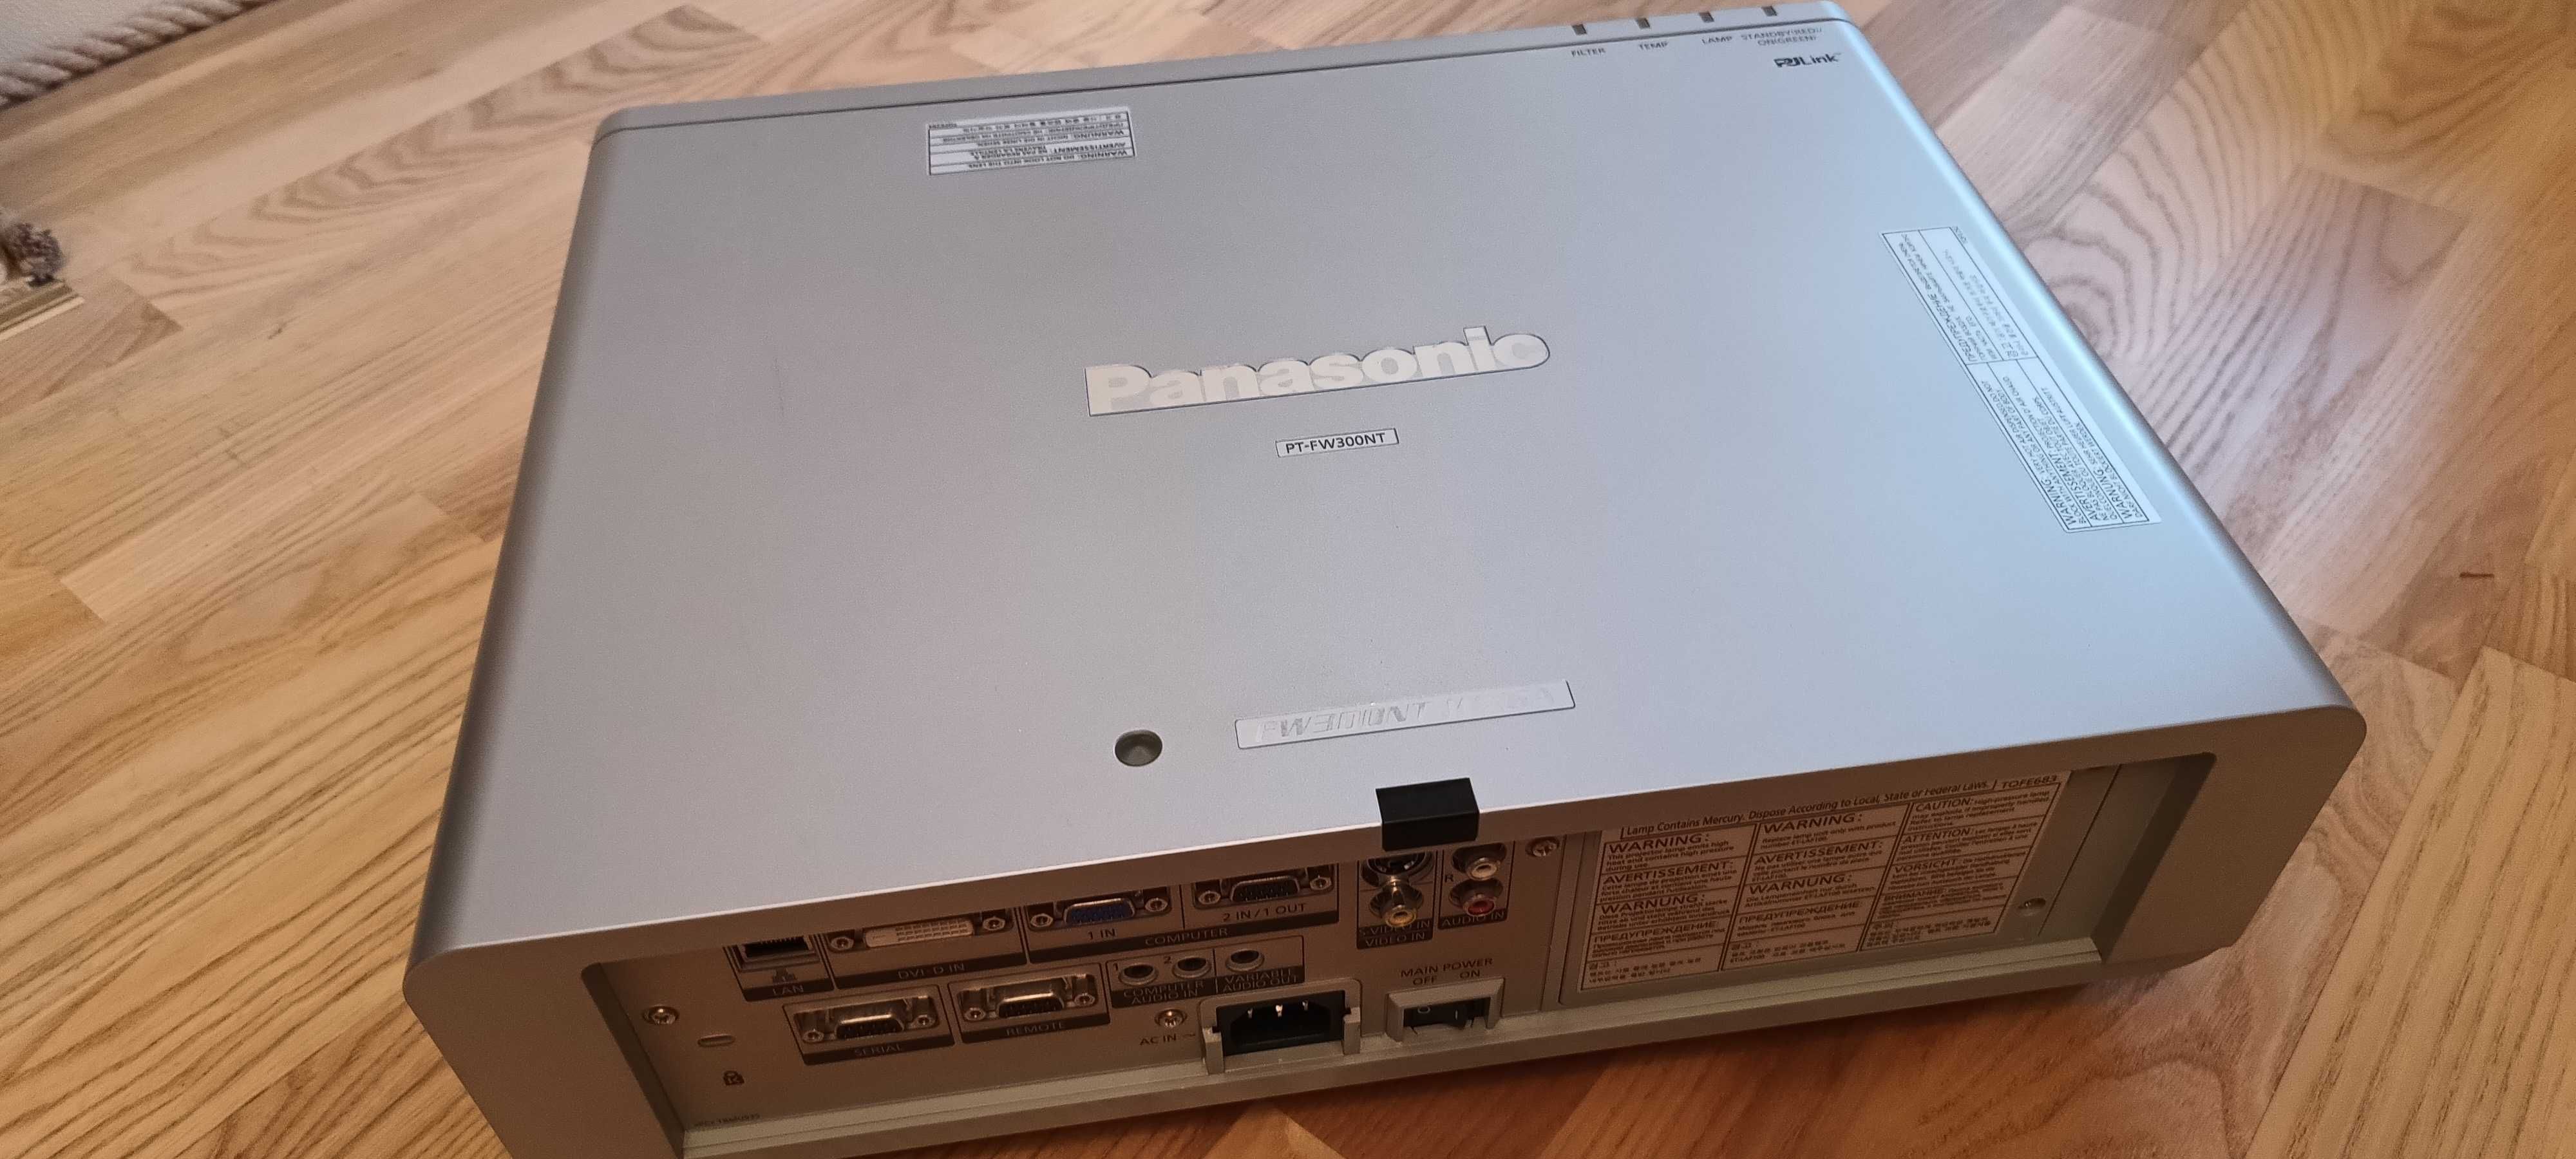 Проектор Panasonic